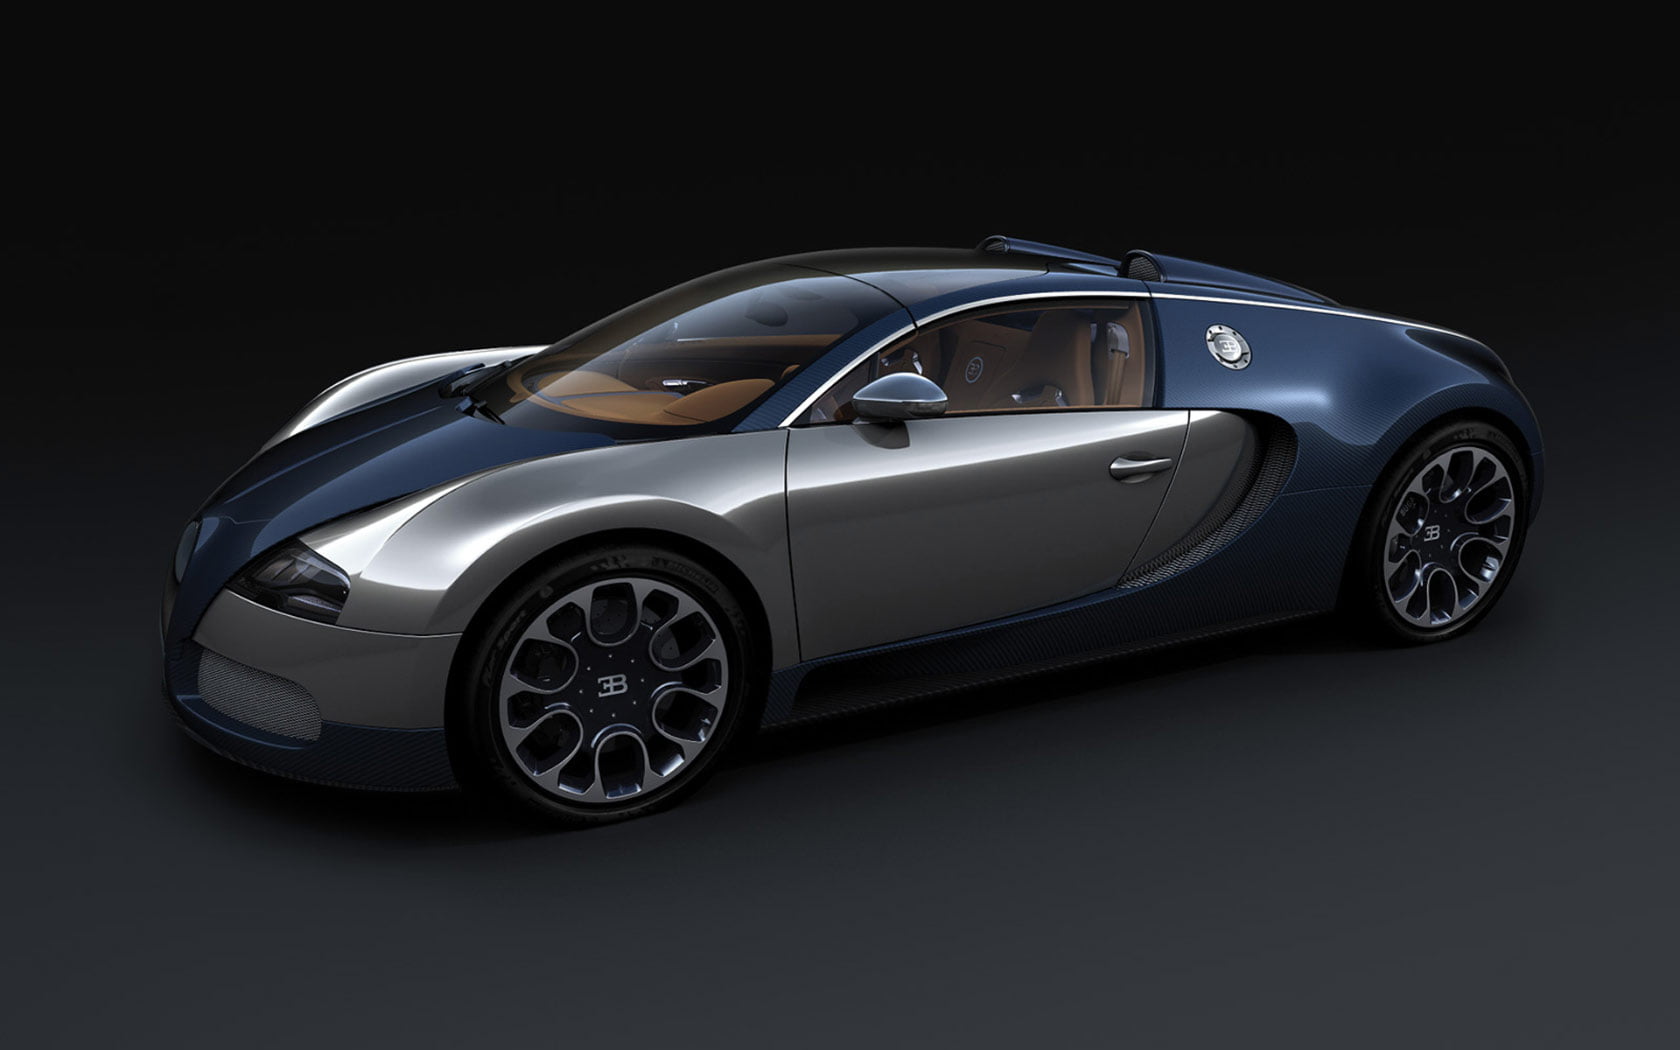 black and silver sports coupe, car, Bugatti Veyron, Bugatti, Bugatti Veyron Sang Bleu